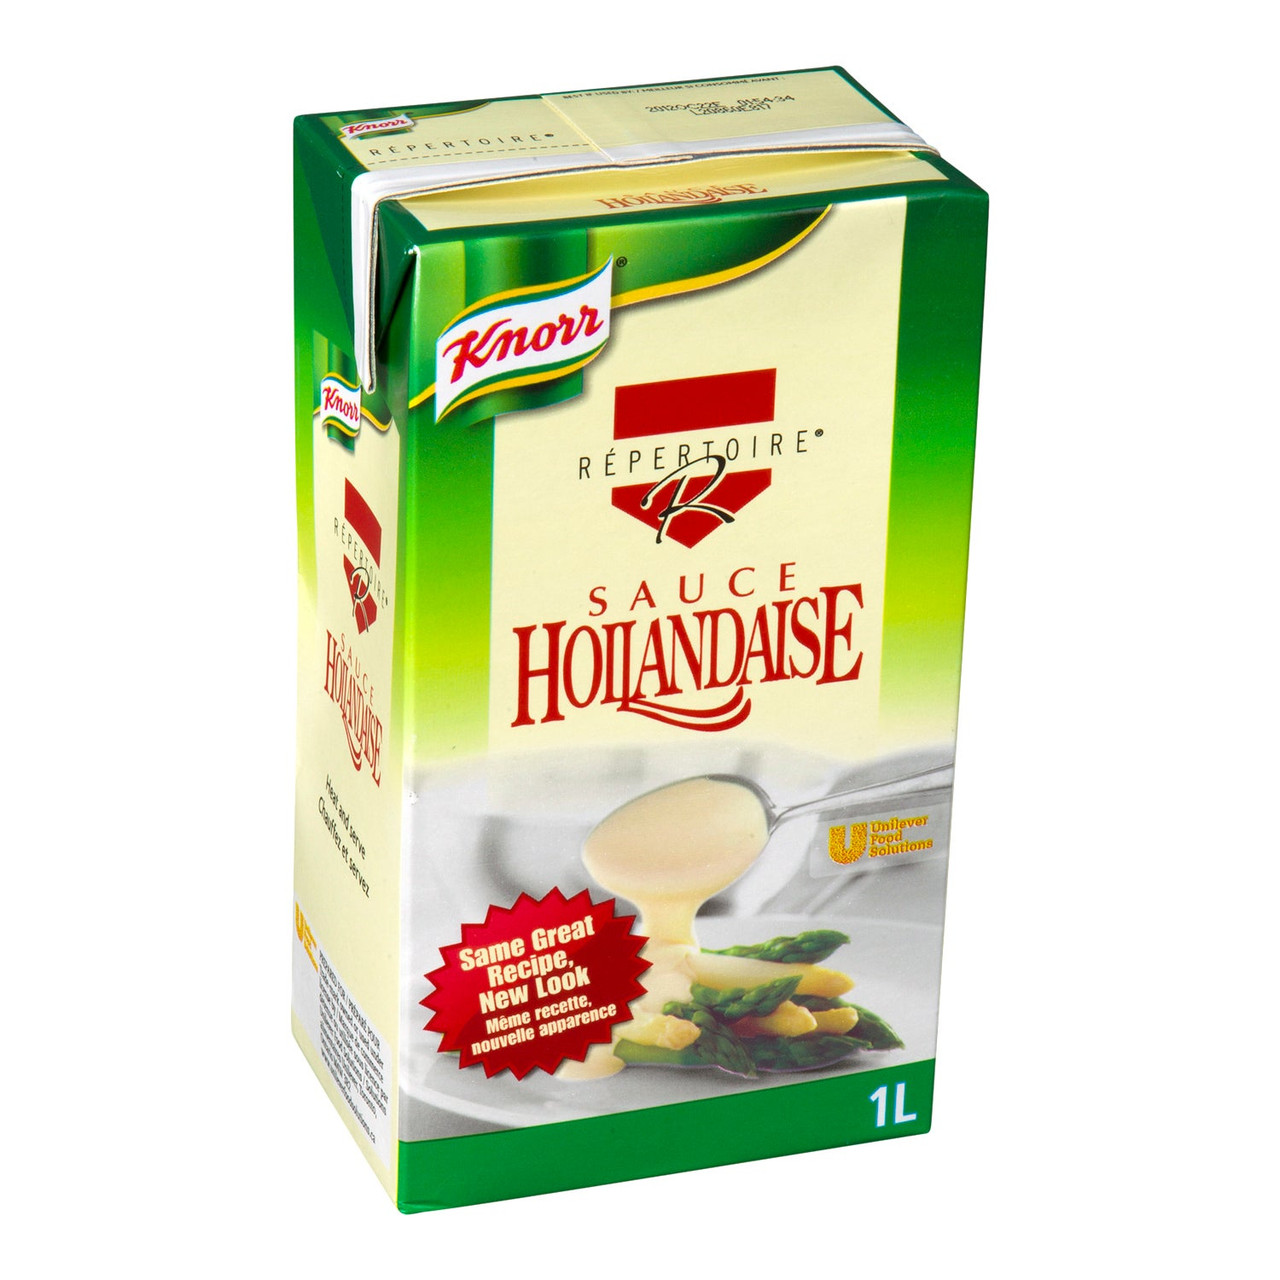 Knorr Hollandaise Sauce, Ready To Use | 1L/Unit, 6 Units/Case